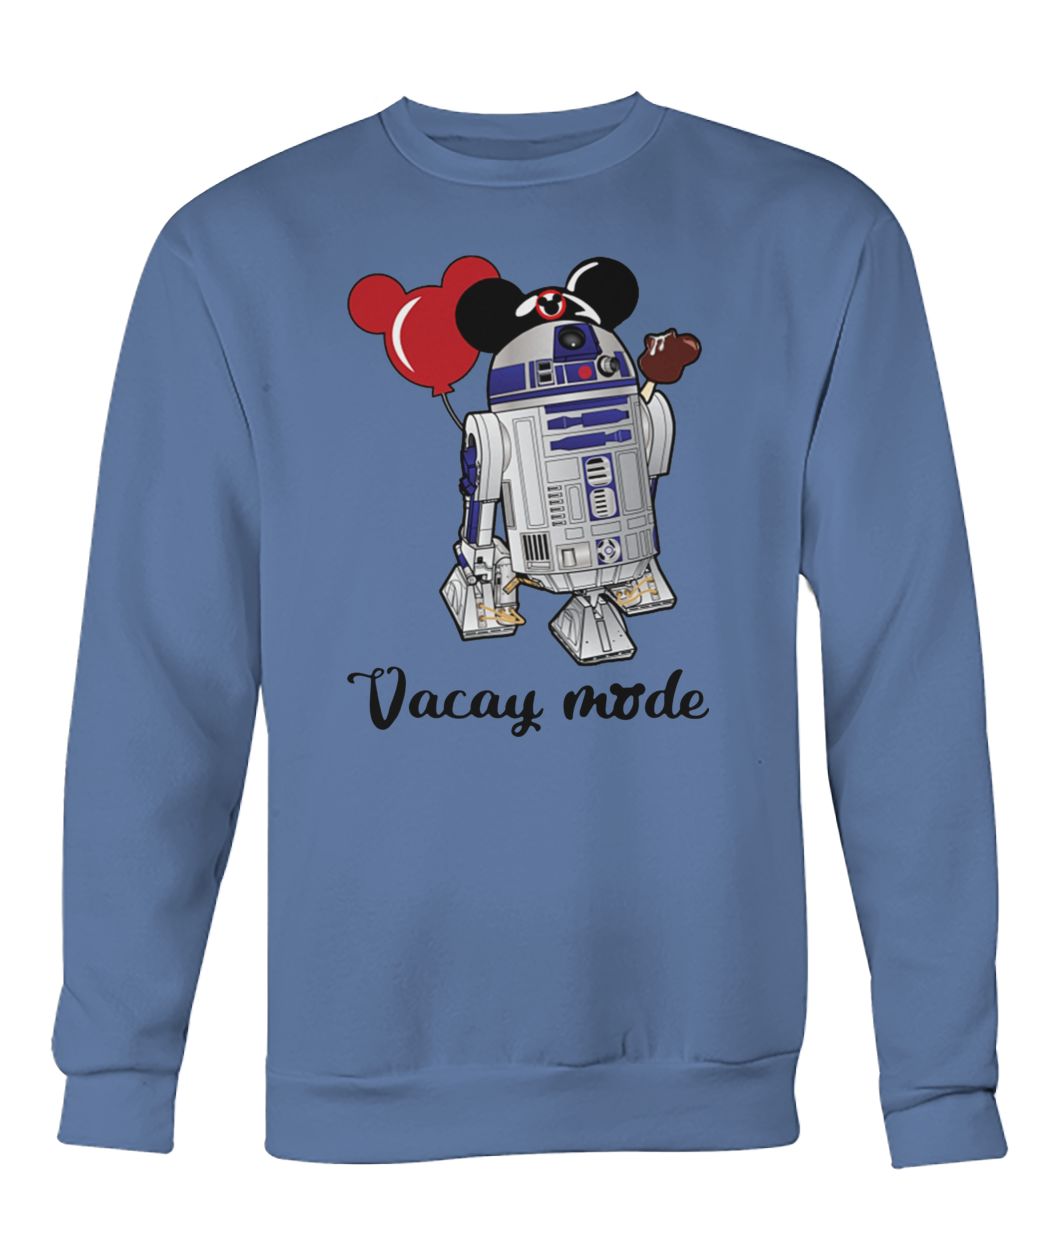 Star Wars R2-D2 vacay mode balloon mickey mouse crew neck sweatshirt